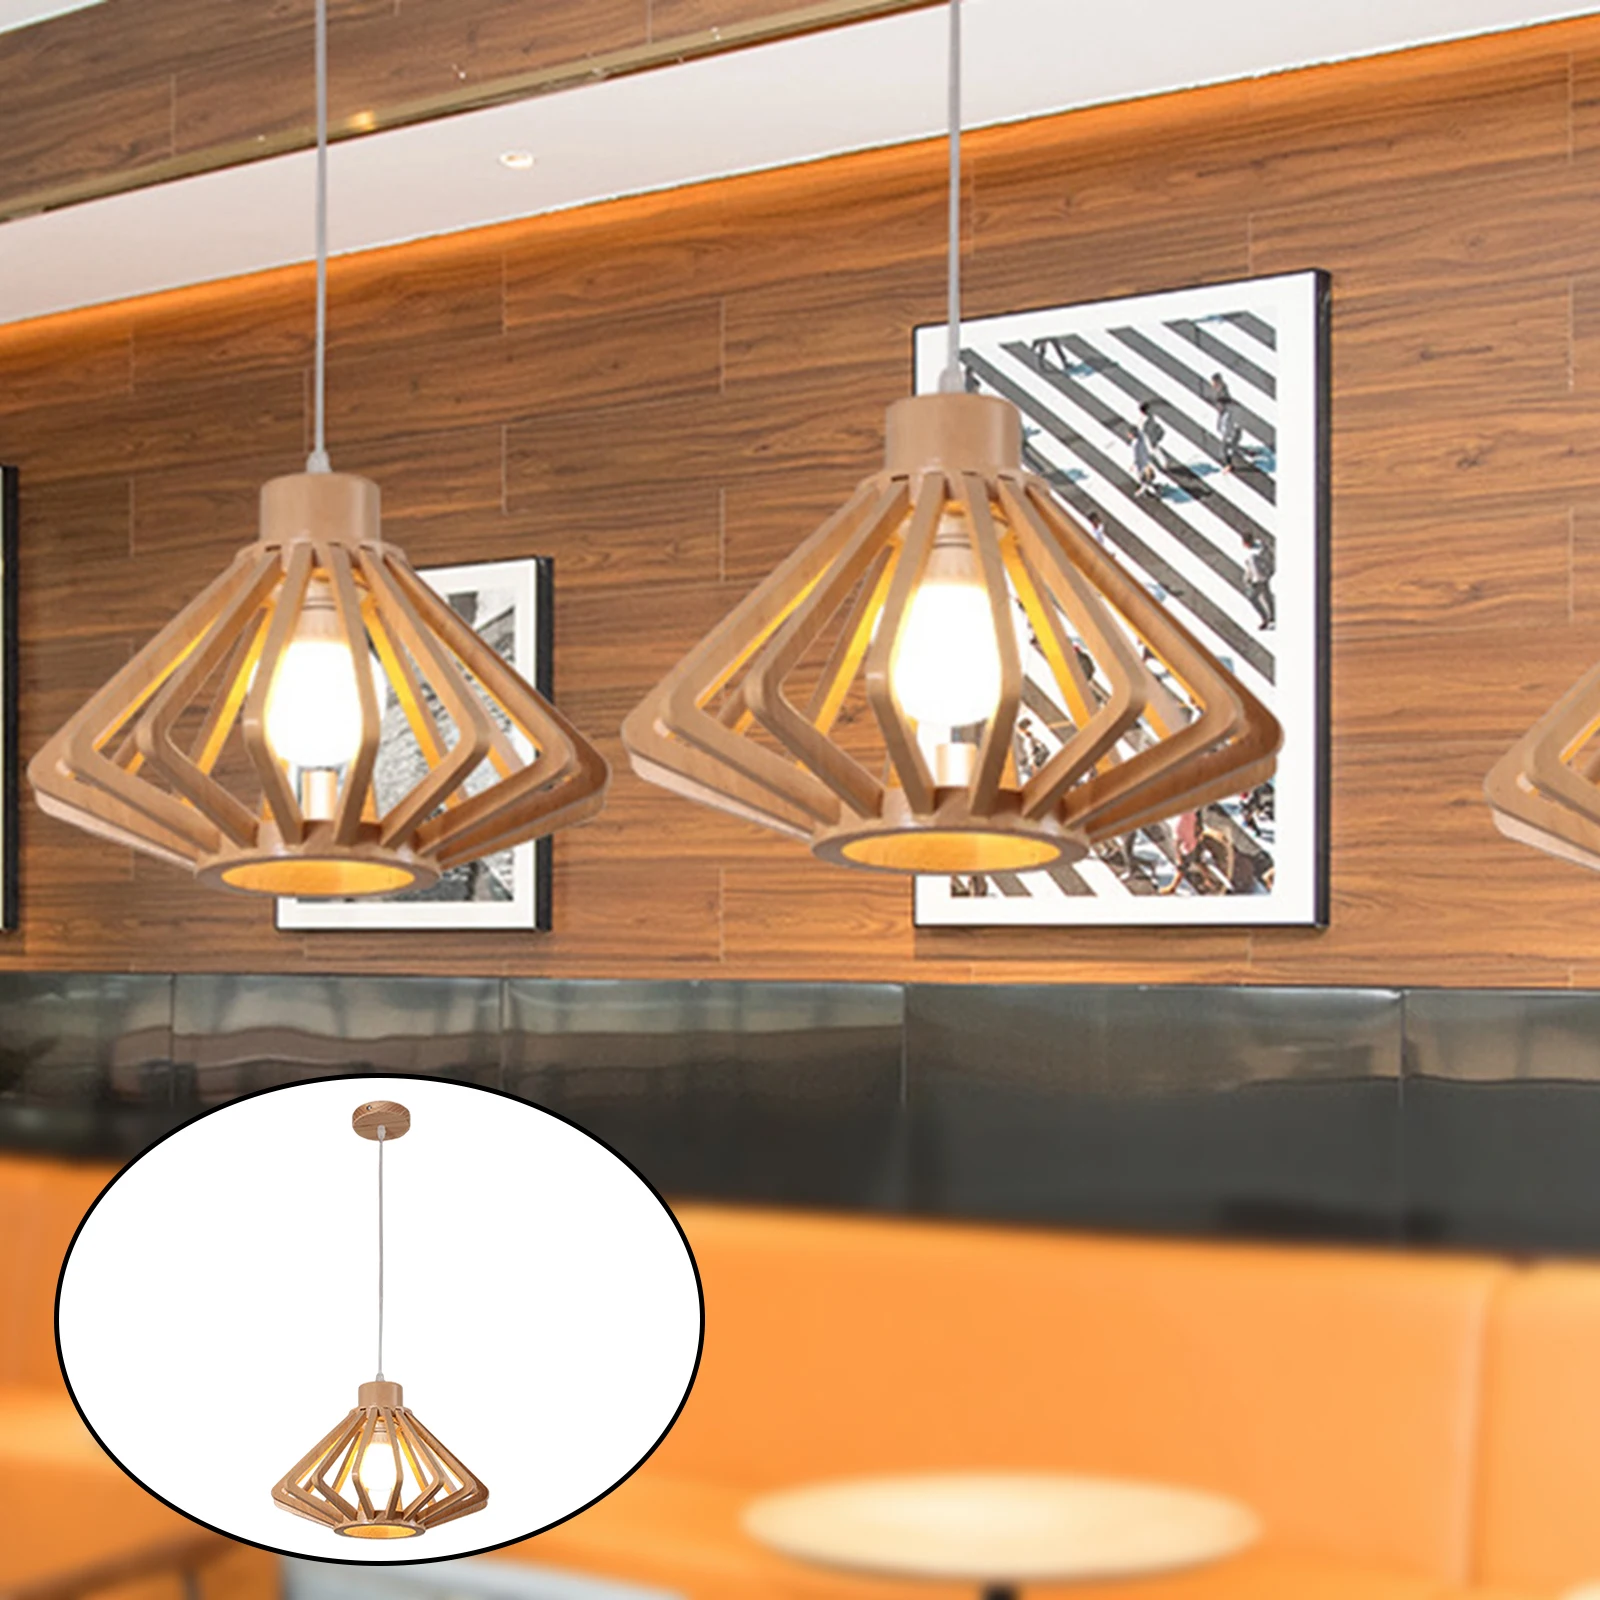 Woven Rattan Decorative LED Pendant Light for Kitchen & Home, Single Natural Wood Handmade Woven Pendant Lights